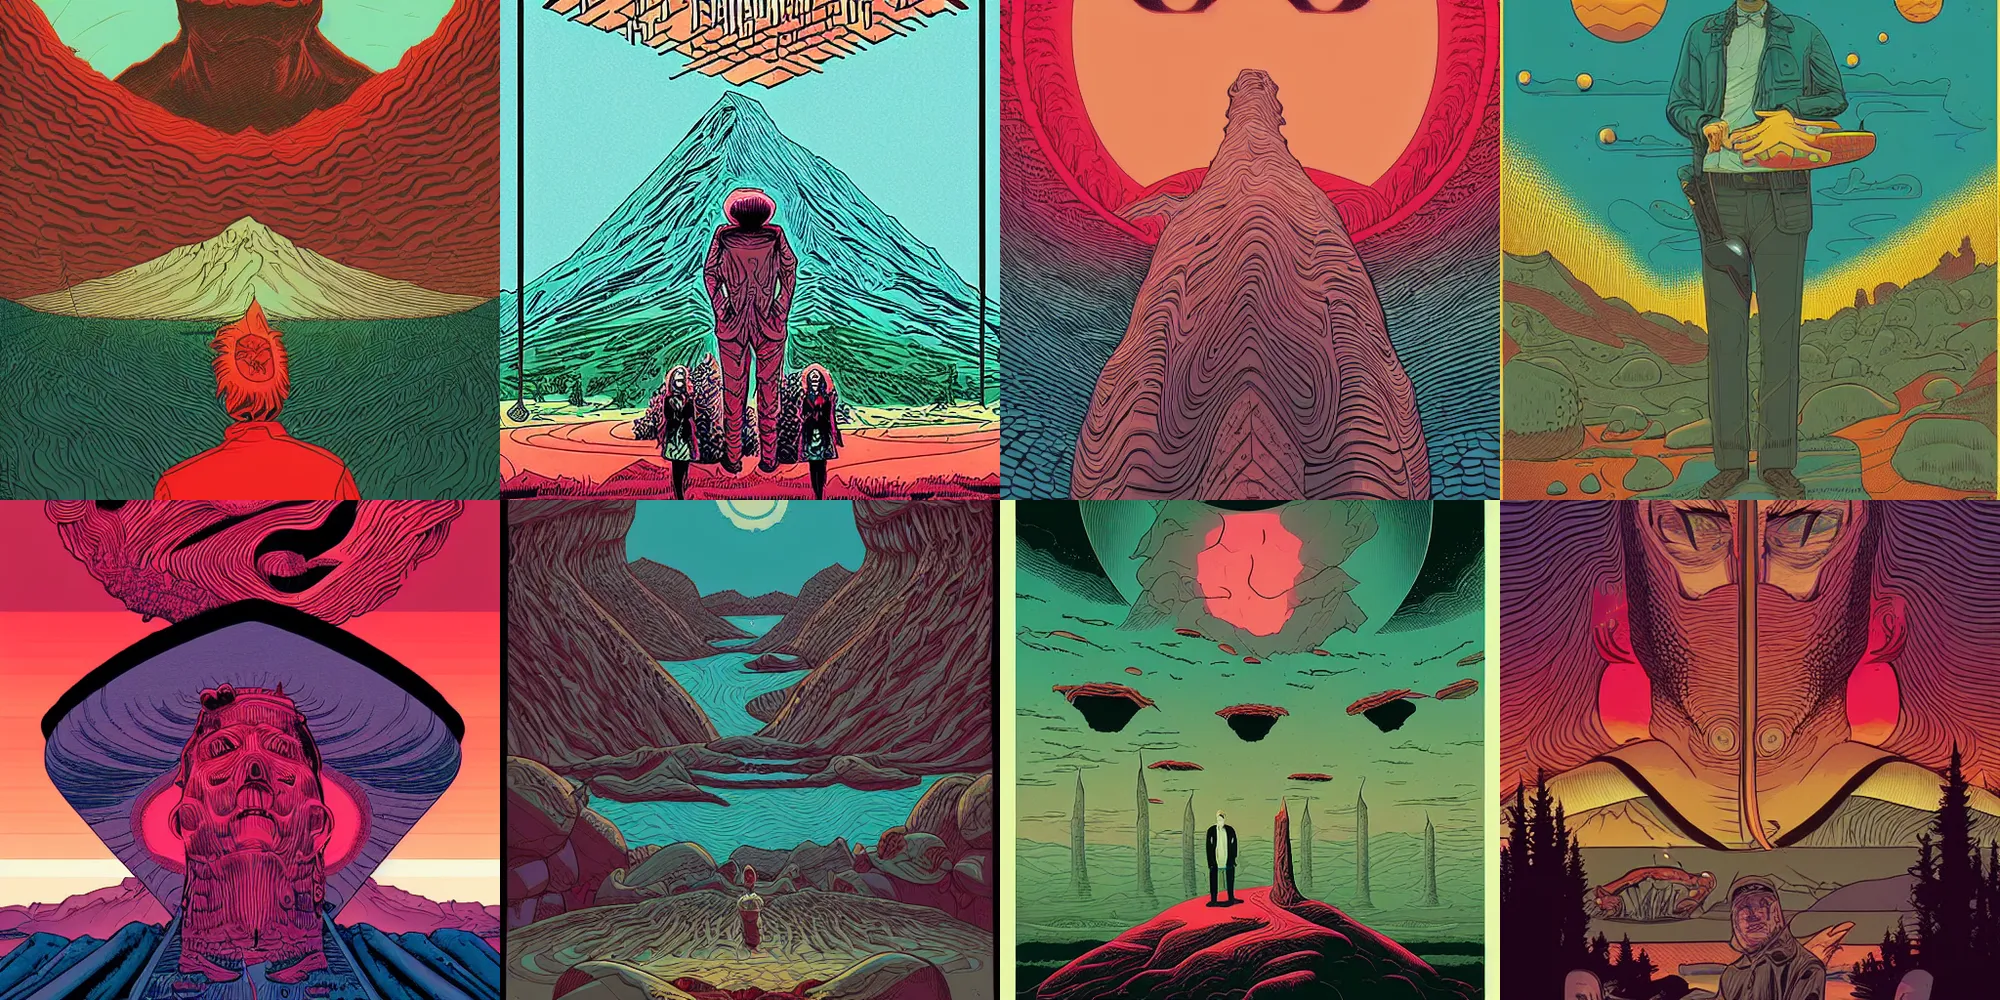 Prompt: Surreal Twin Peaks comic artwork by Moebius, Kilian Eng, Deathburger, dan mumford